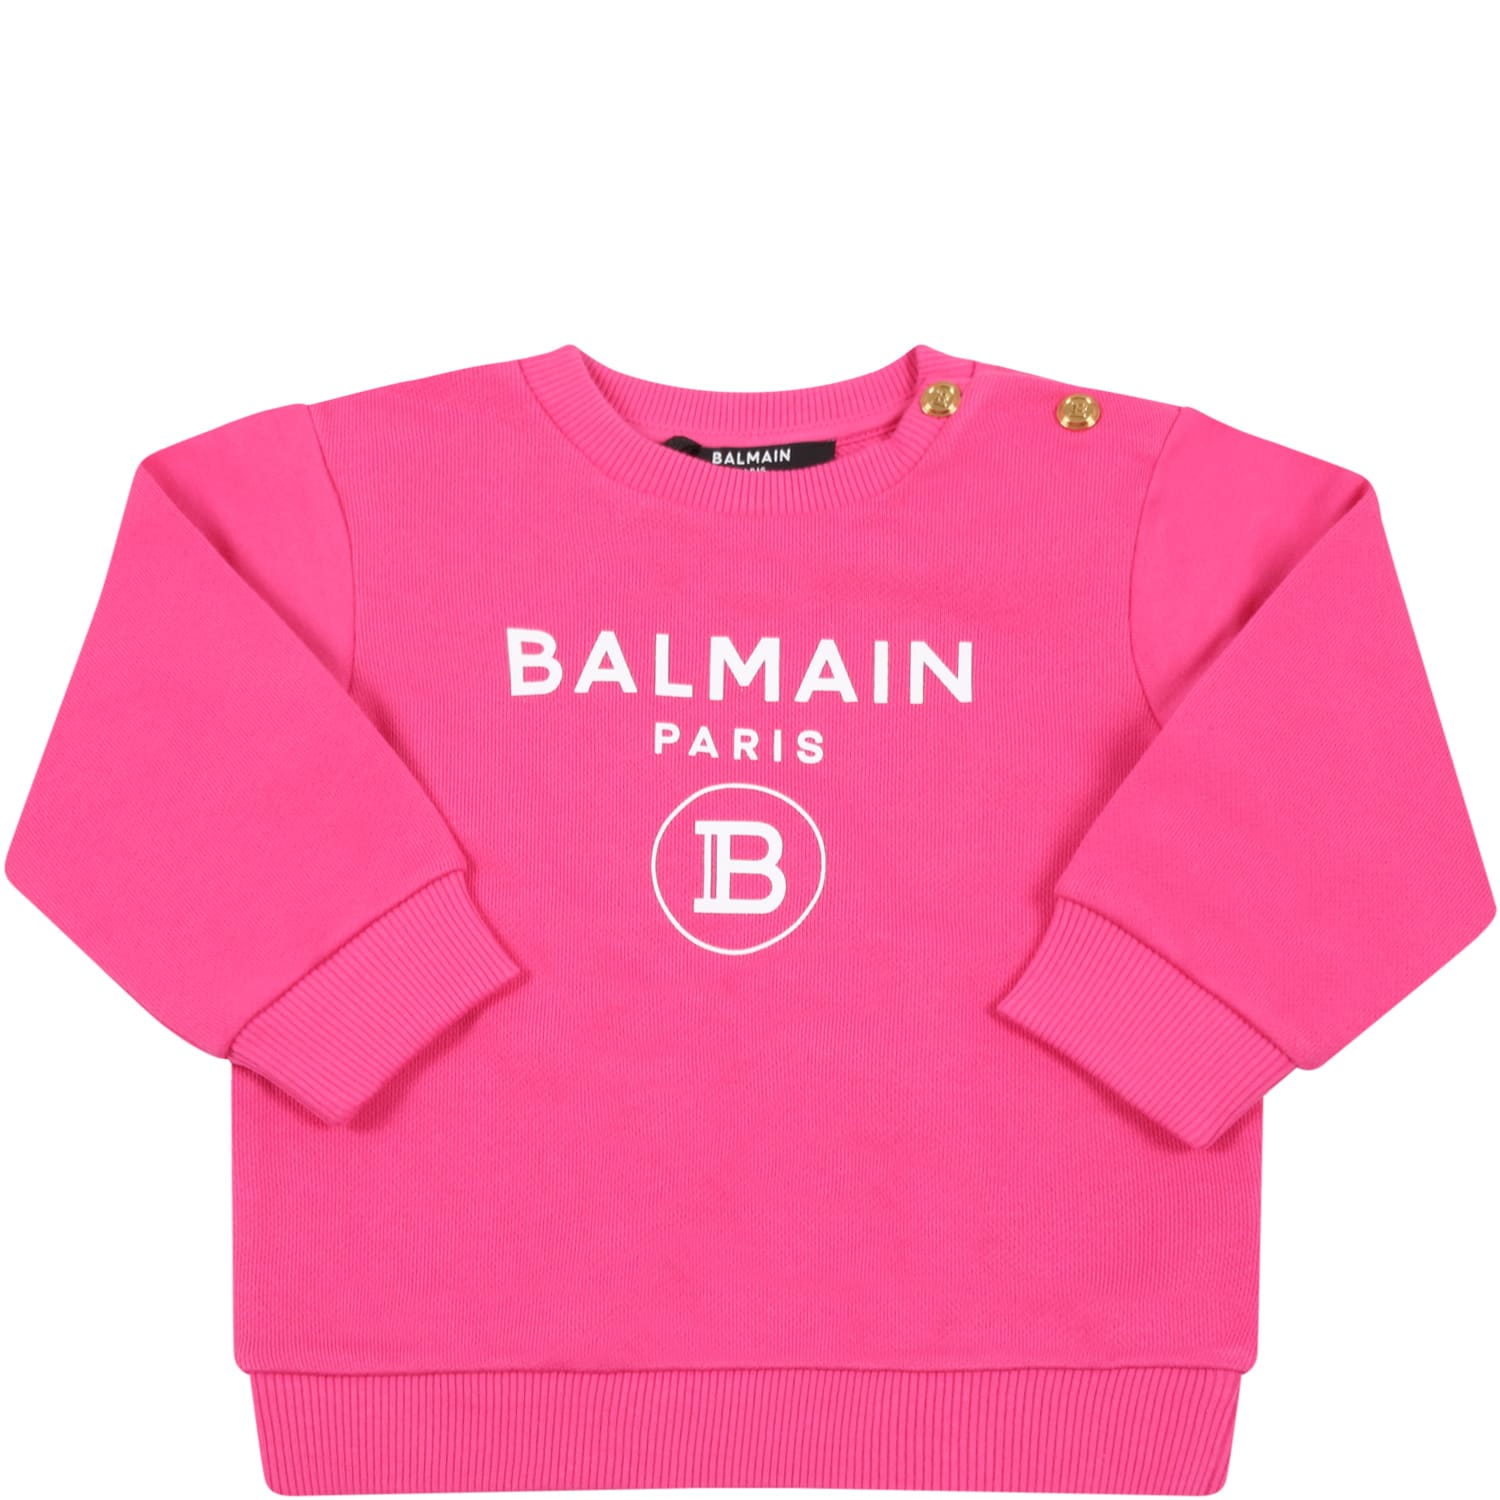 Balmain Fuchsia Sweatshirt For Baby Girl With Logos